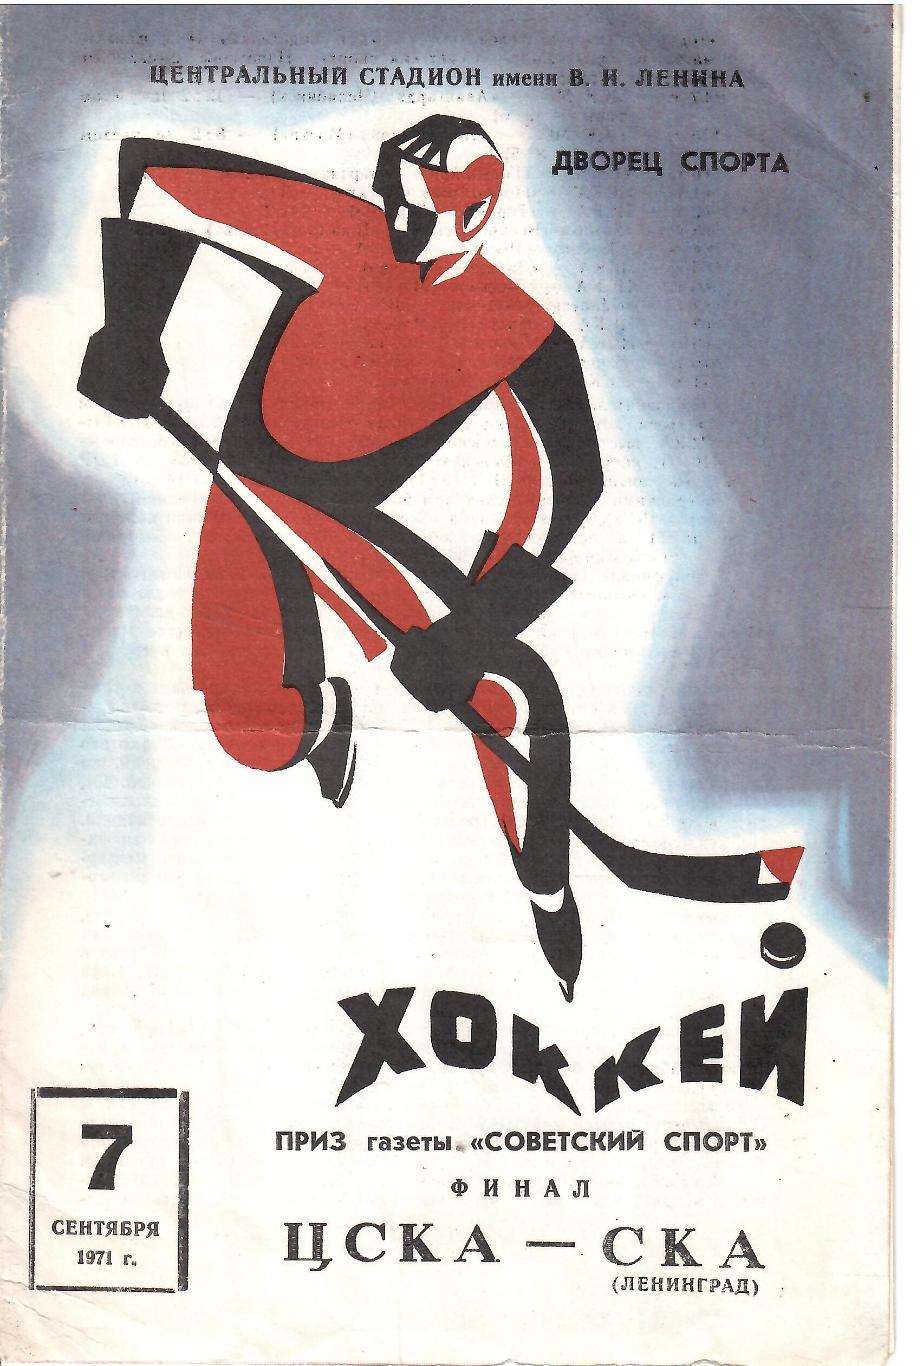 1971 Хоккей ЦСКА - СКА Ленинград ФИНАЛ Турнира Советский Спорт